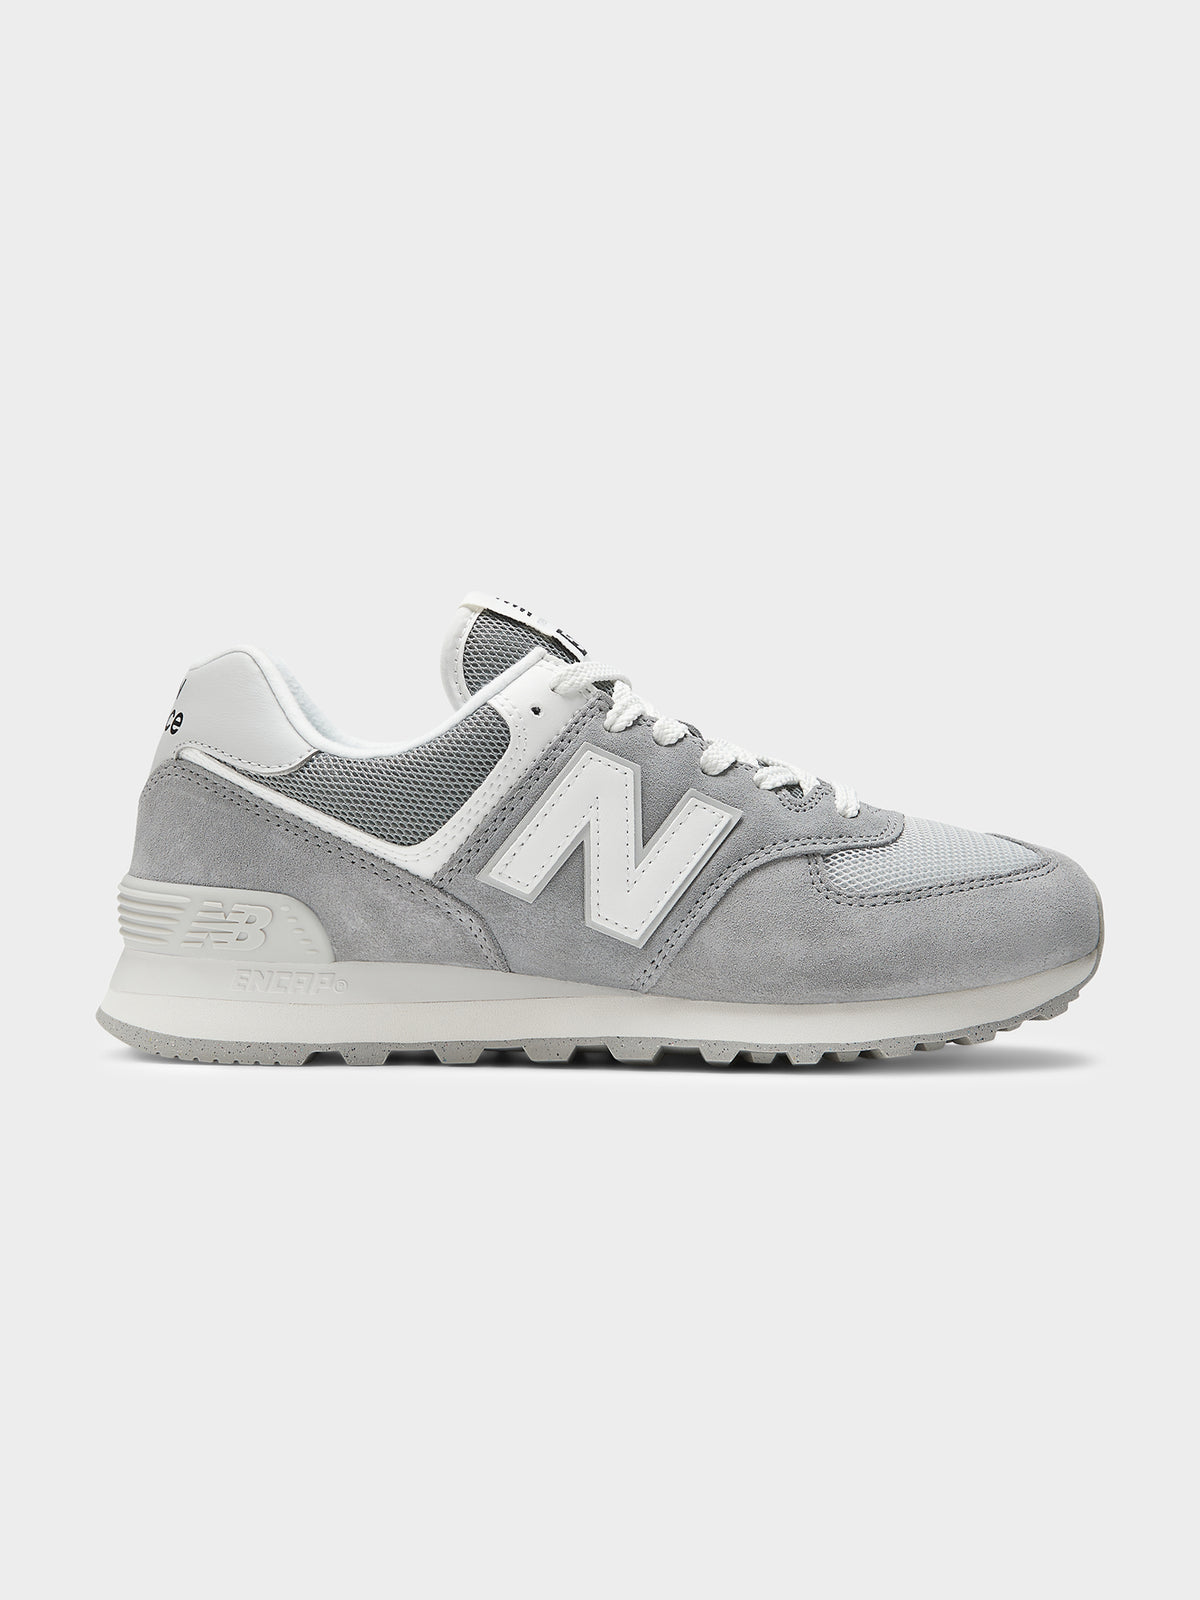 Unisex 574 Sneakers in Grey